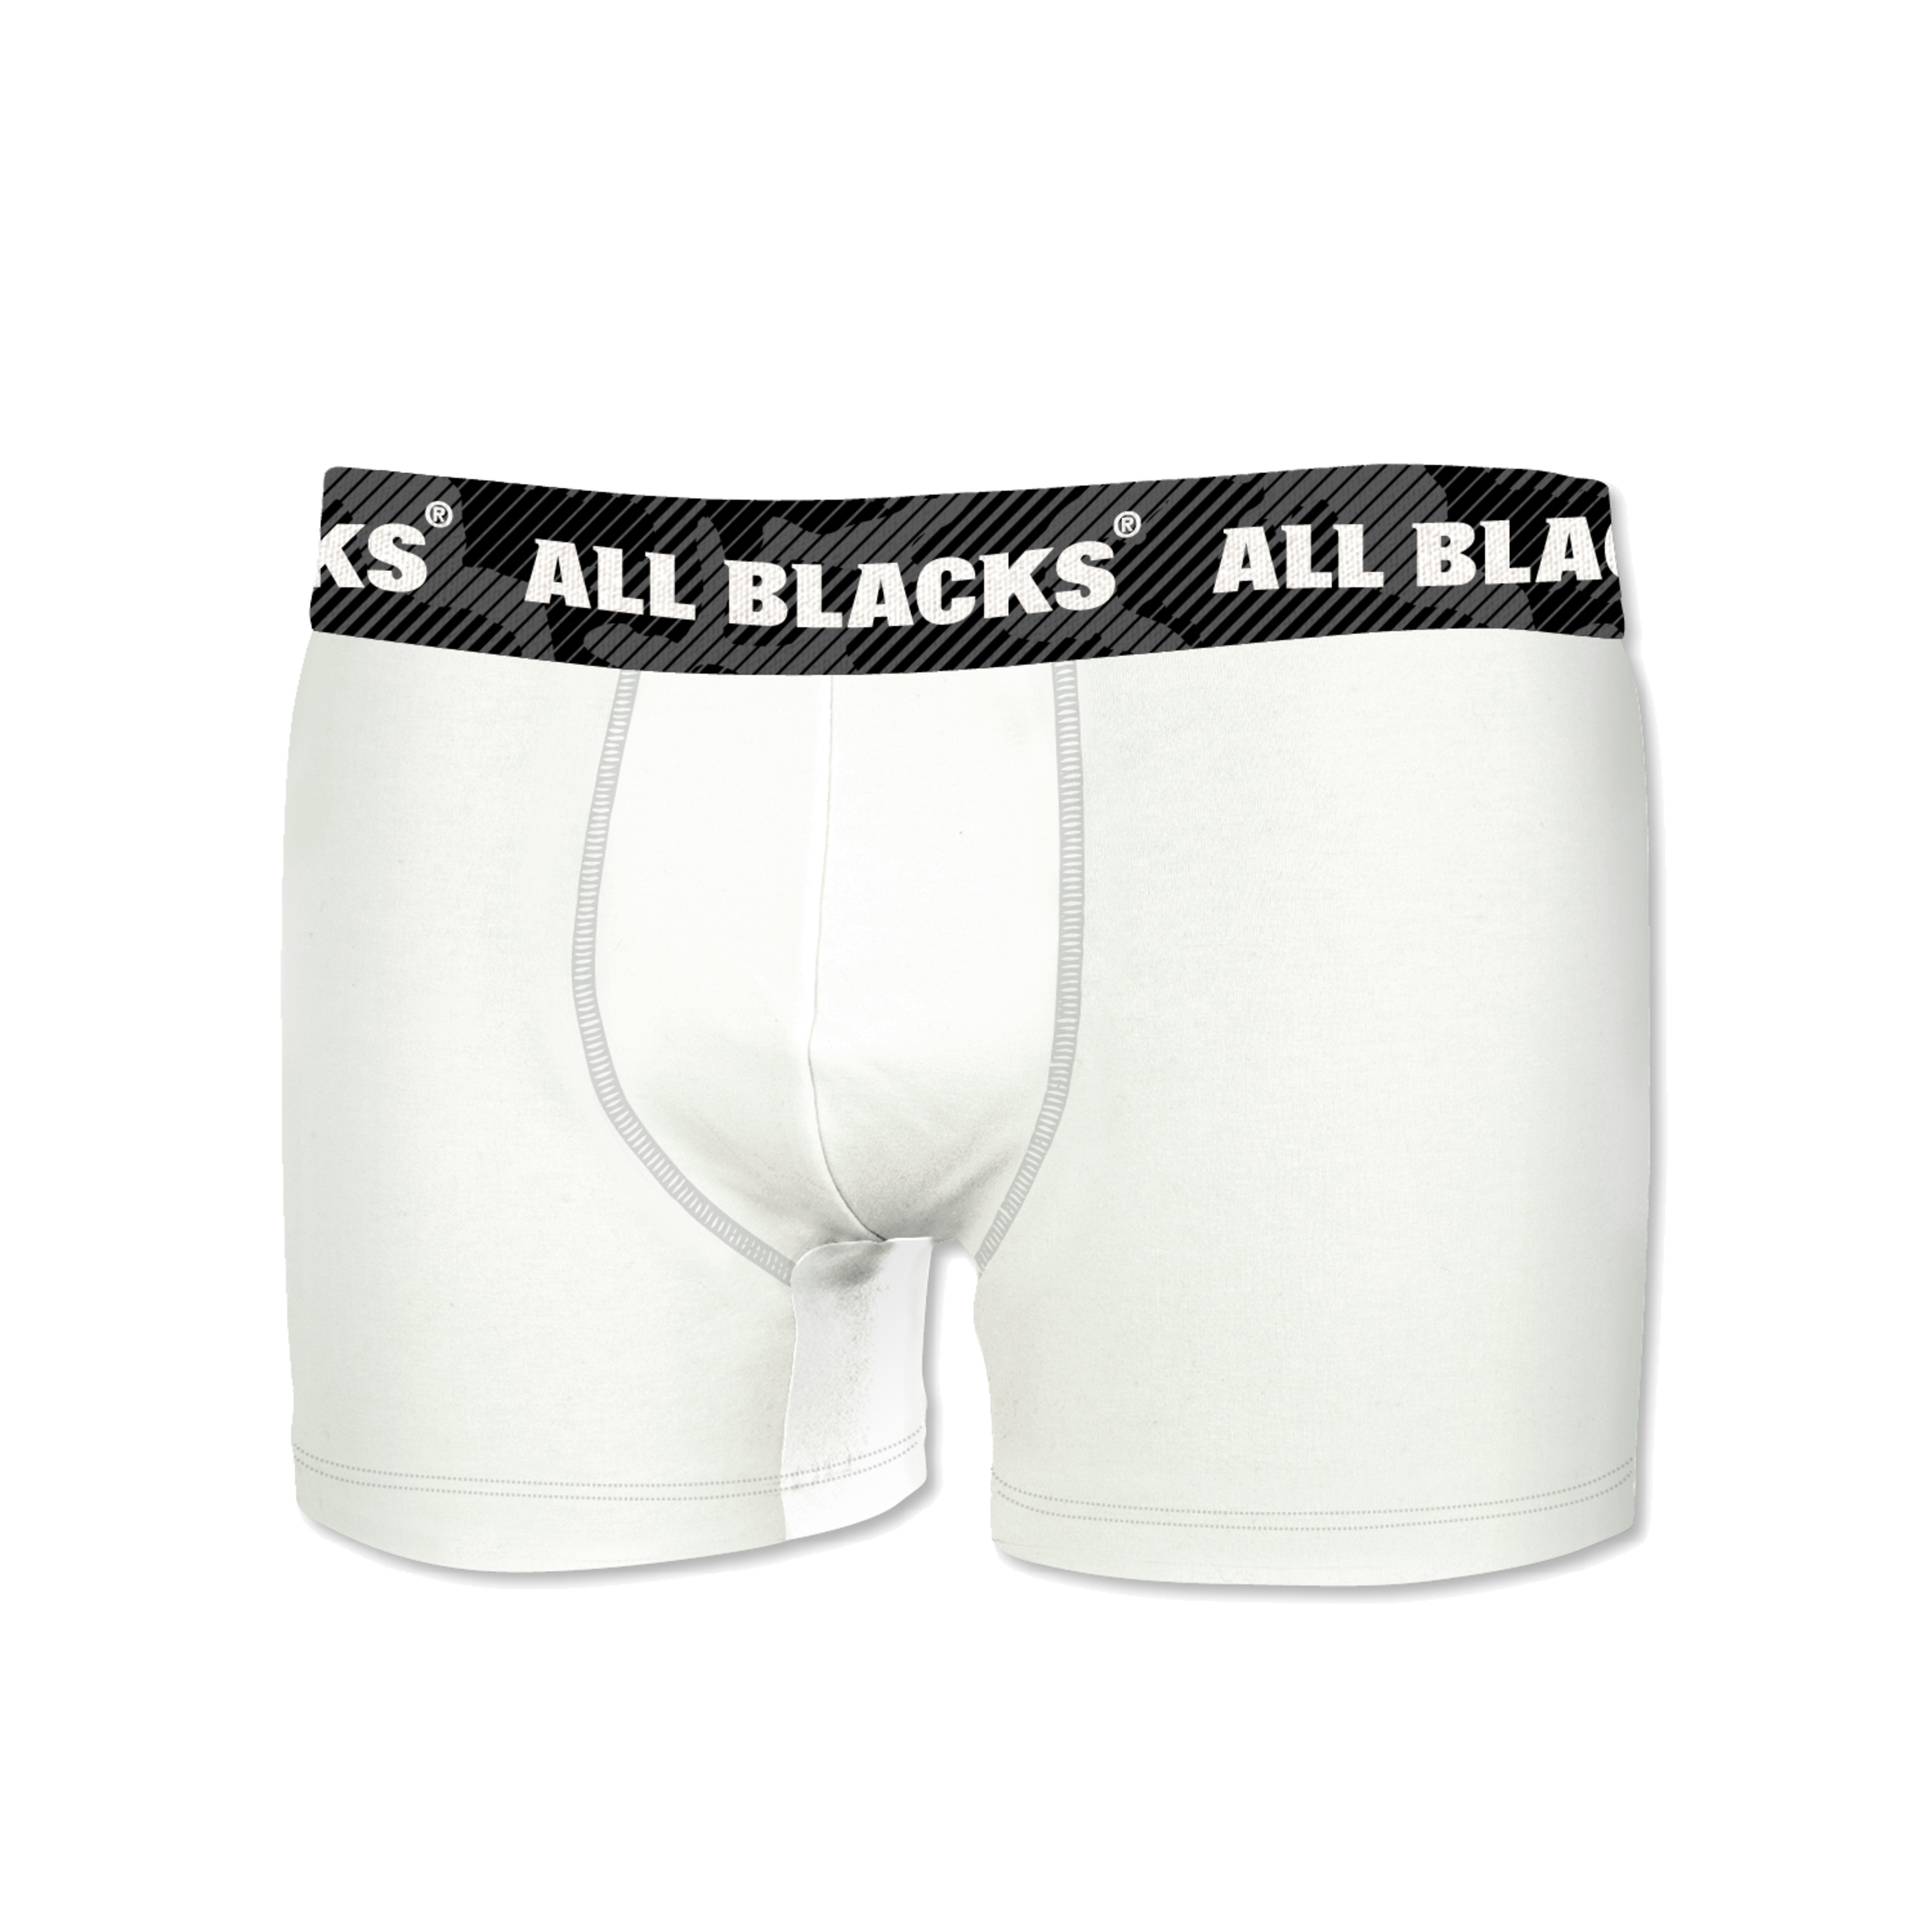 Calzoncillos All Blacks - Blanco - Casual Hombre  MKP